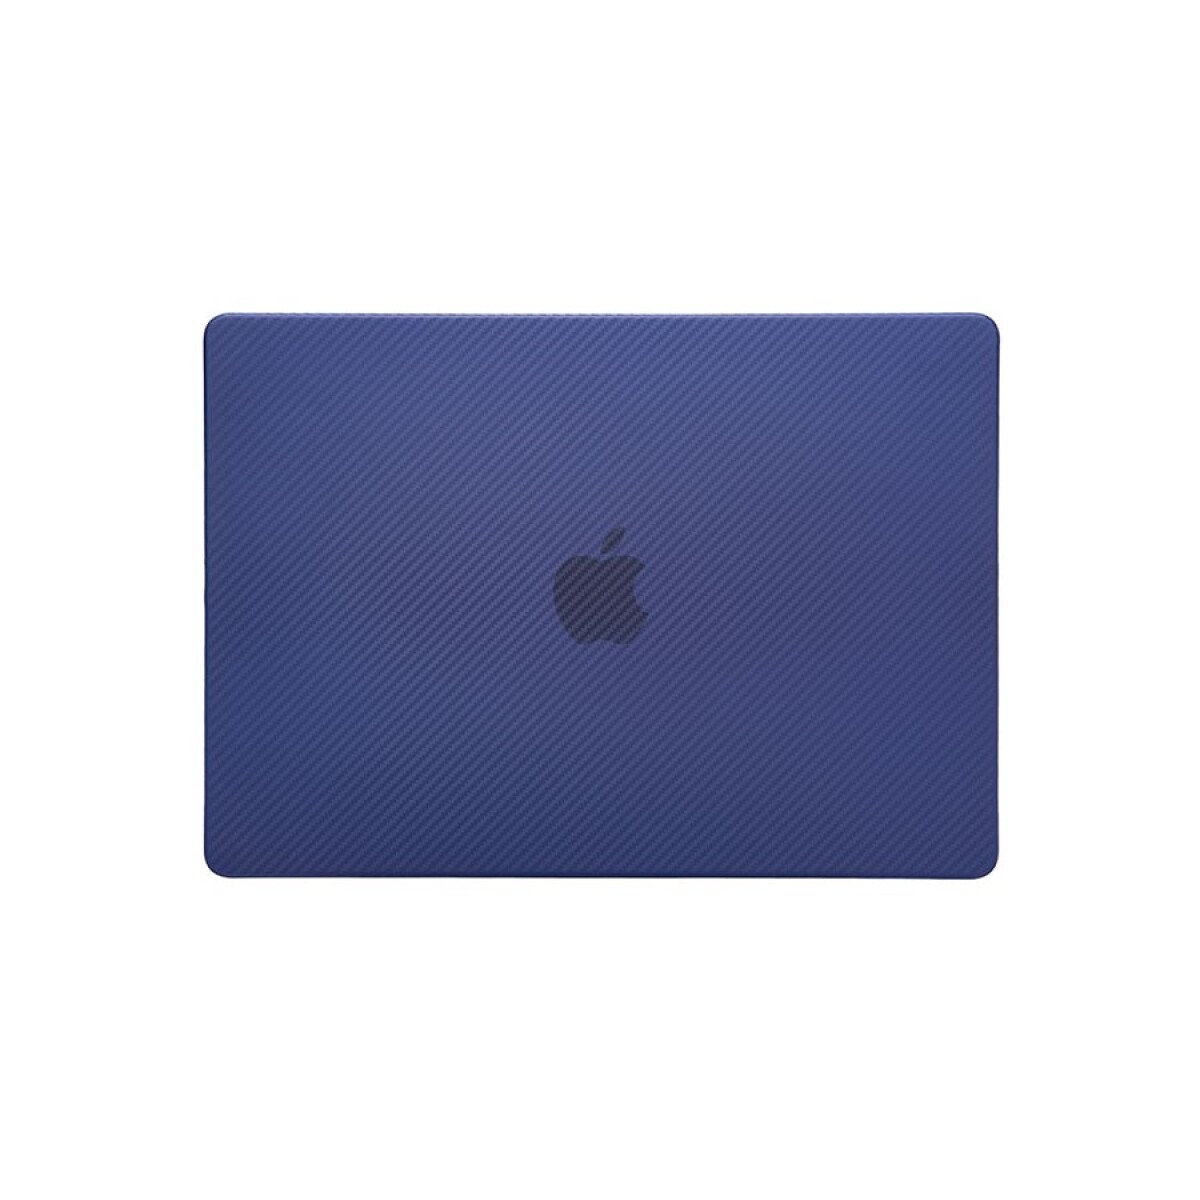 Carcasa protectora hardsell fibra carbono para macbook 13' 2020 devia - Peony blue 